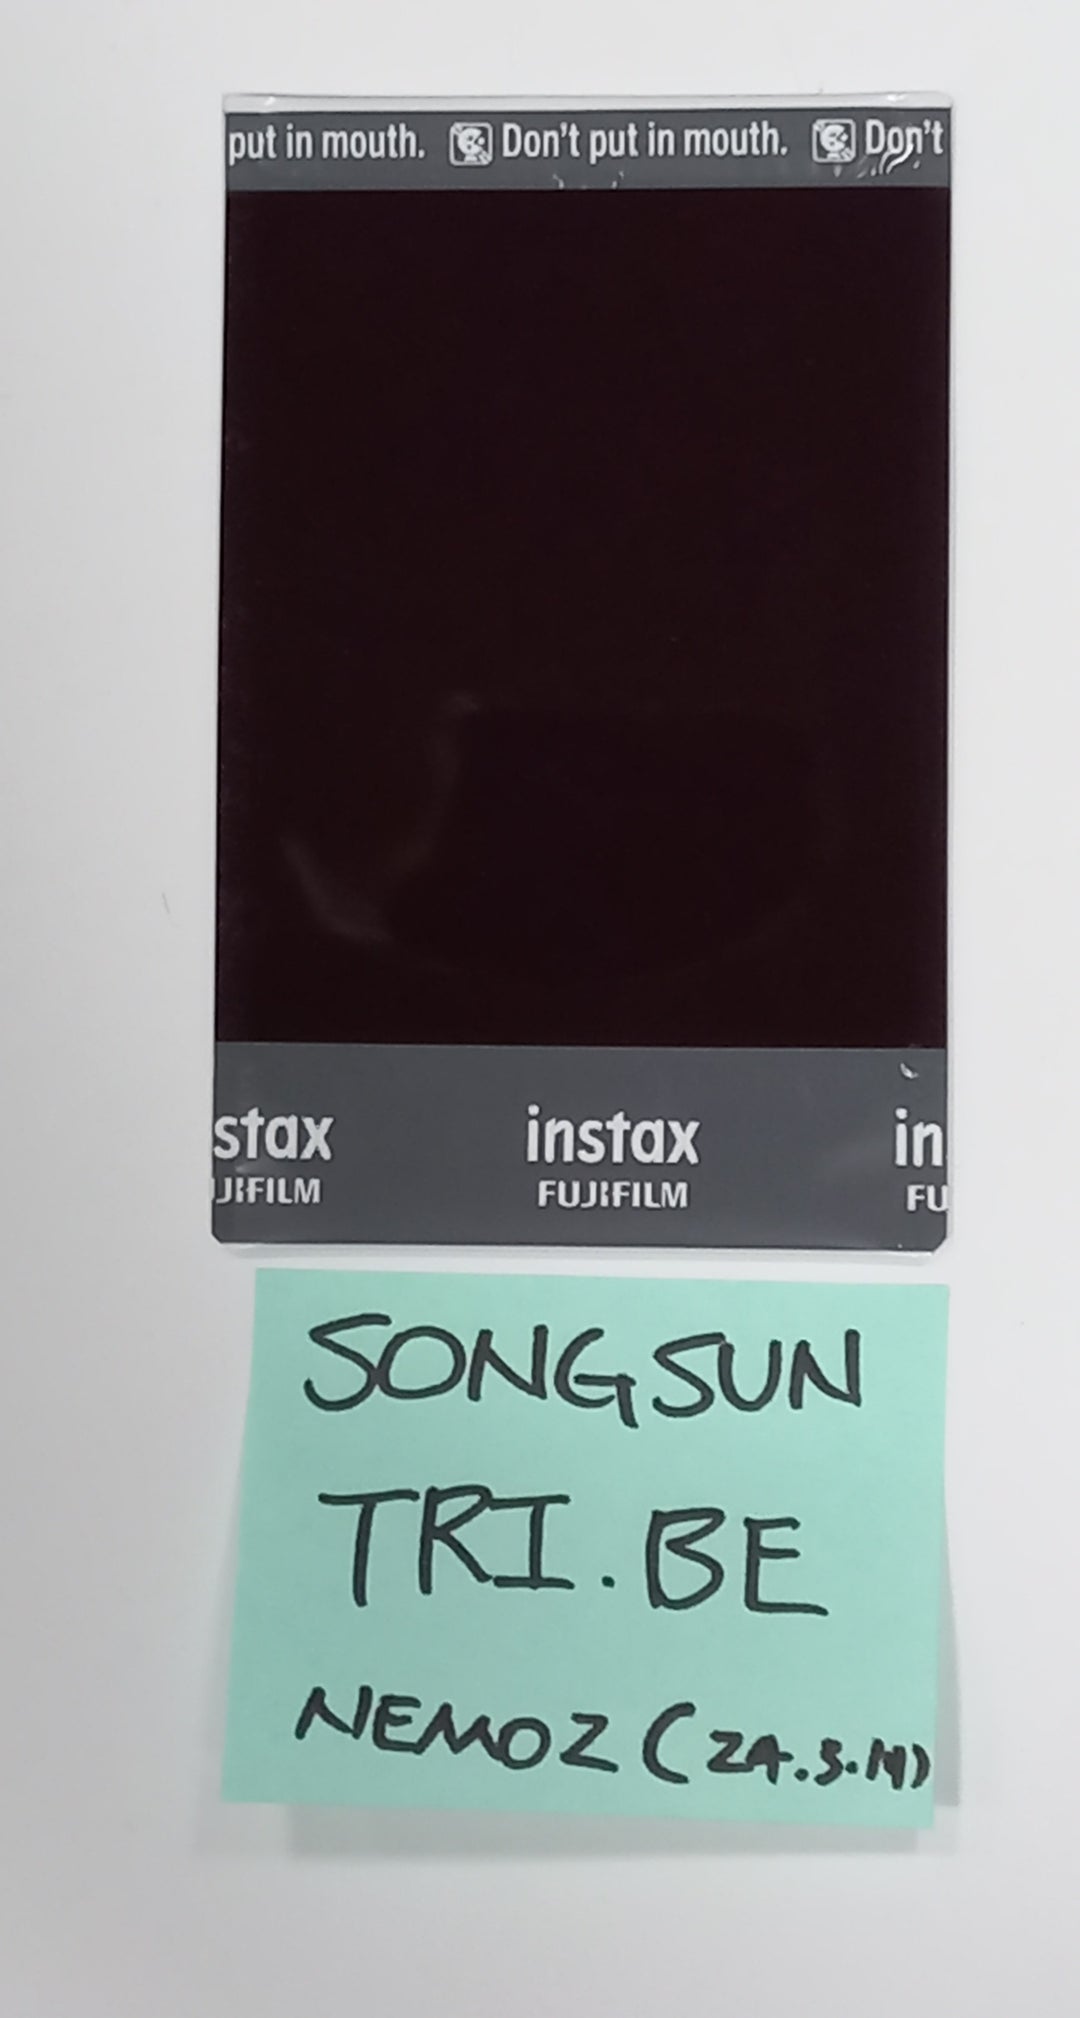 Songsun (Of TRI.BE) "Diamond" - Hand Autographed(Signed) Polaroid [24.3.11]